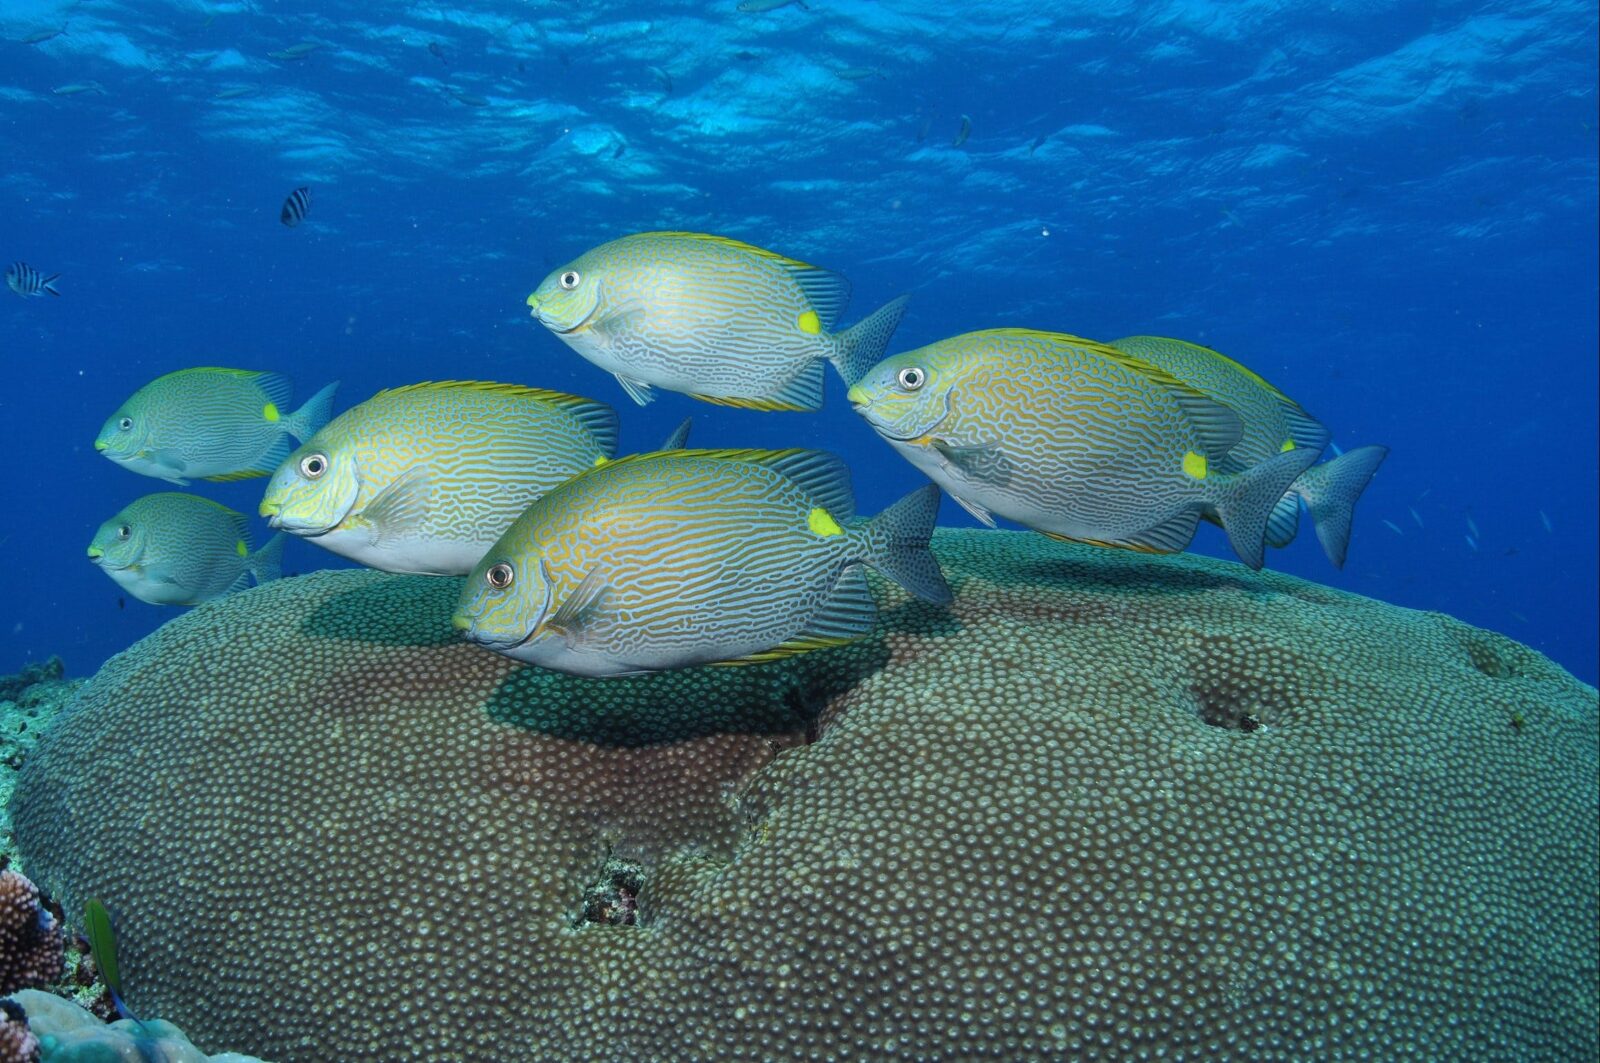 Lodestone Reef